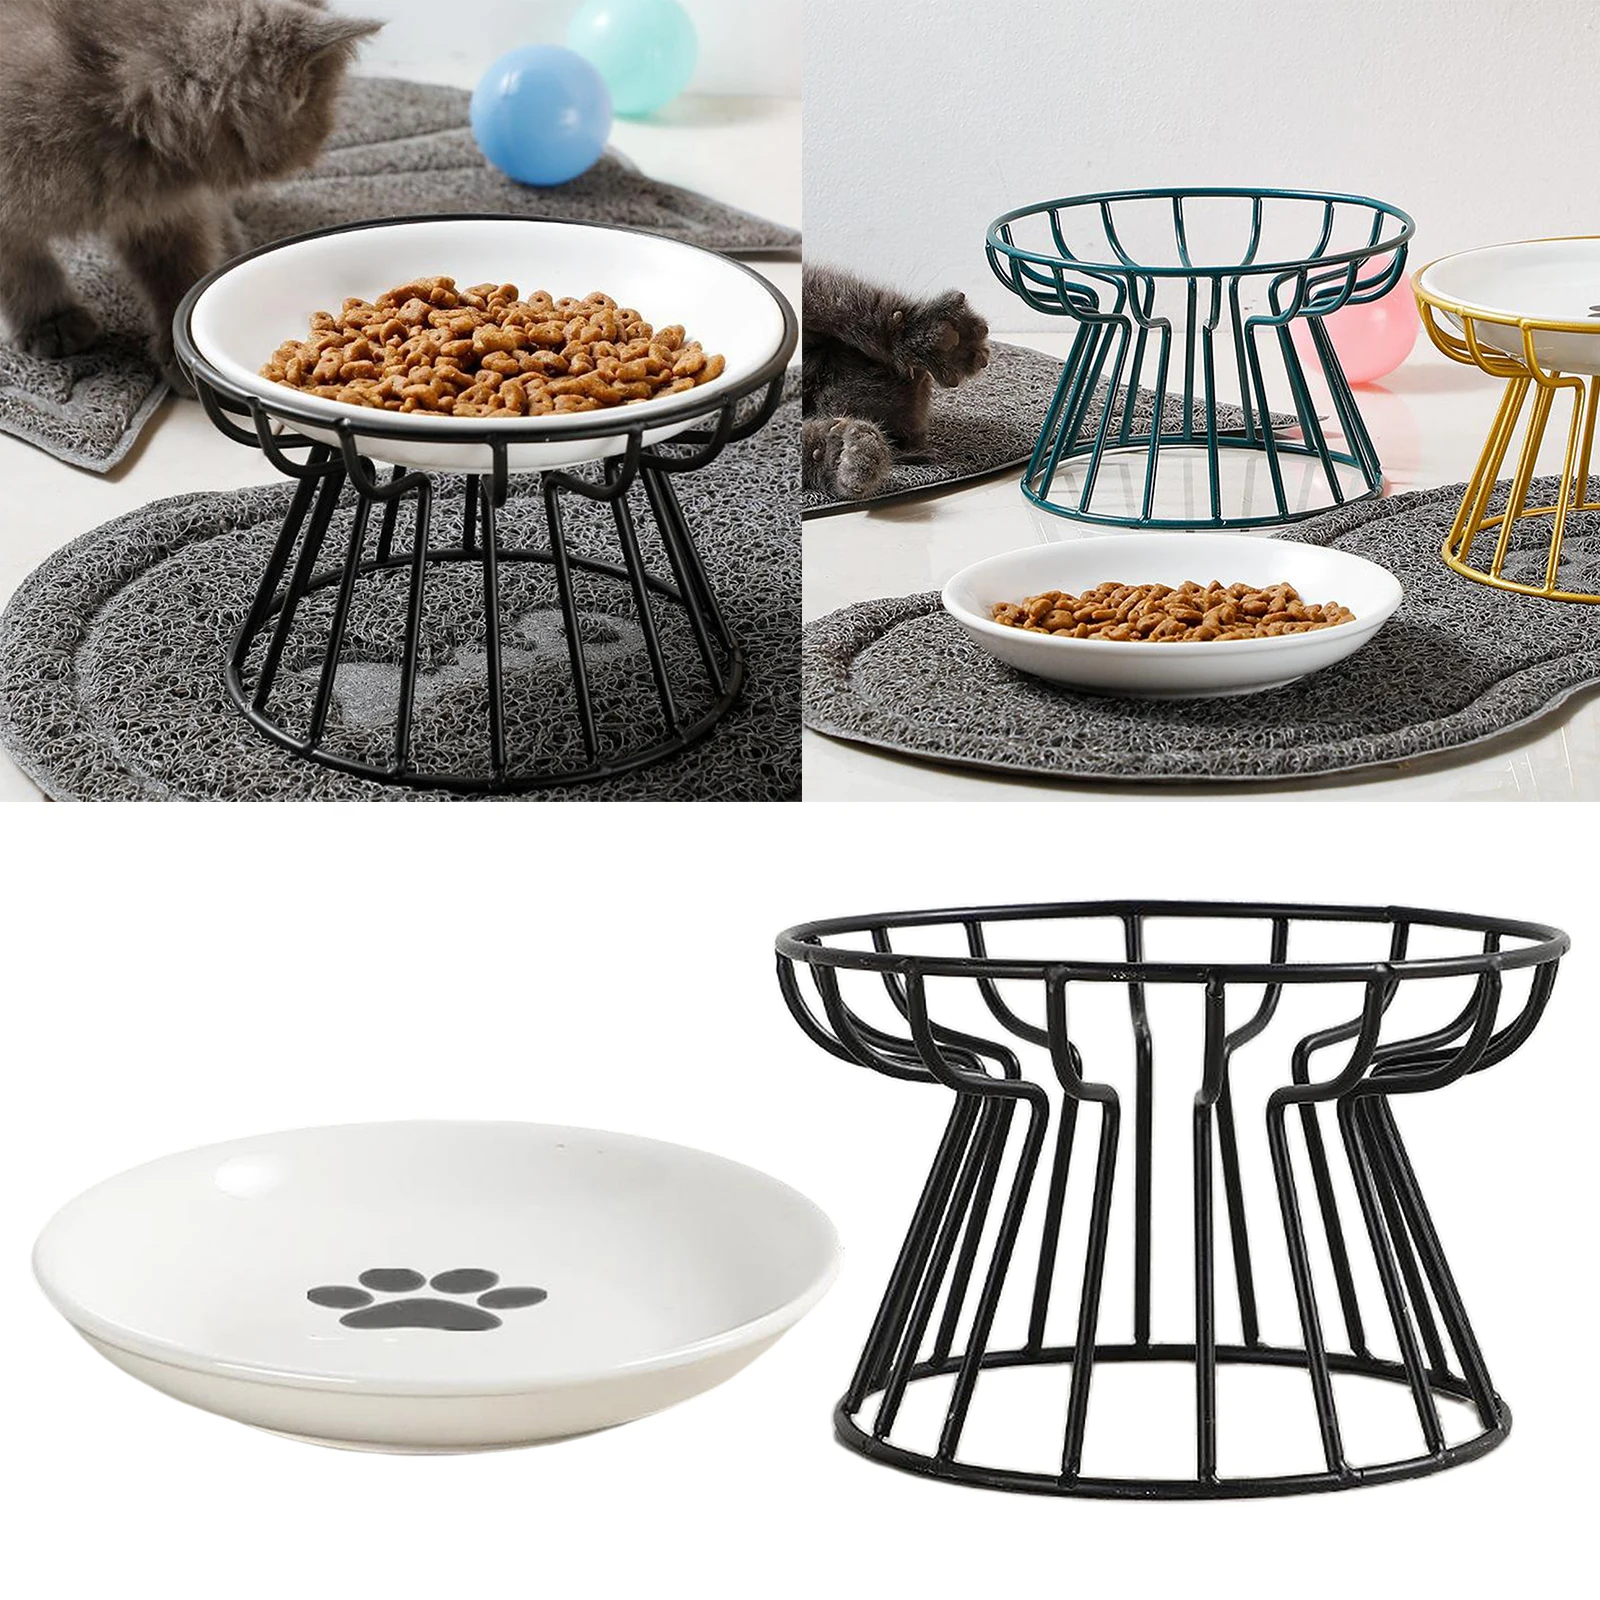 Ceramic Pet Bowl Iron Holder Shelf Stand Pet Single Bowl Feeding Food Bowls for Cat Dog